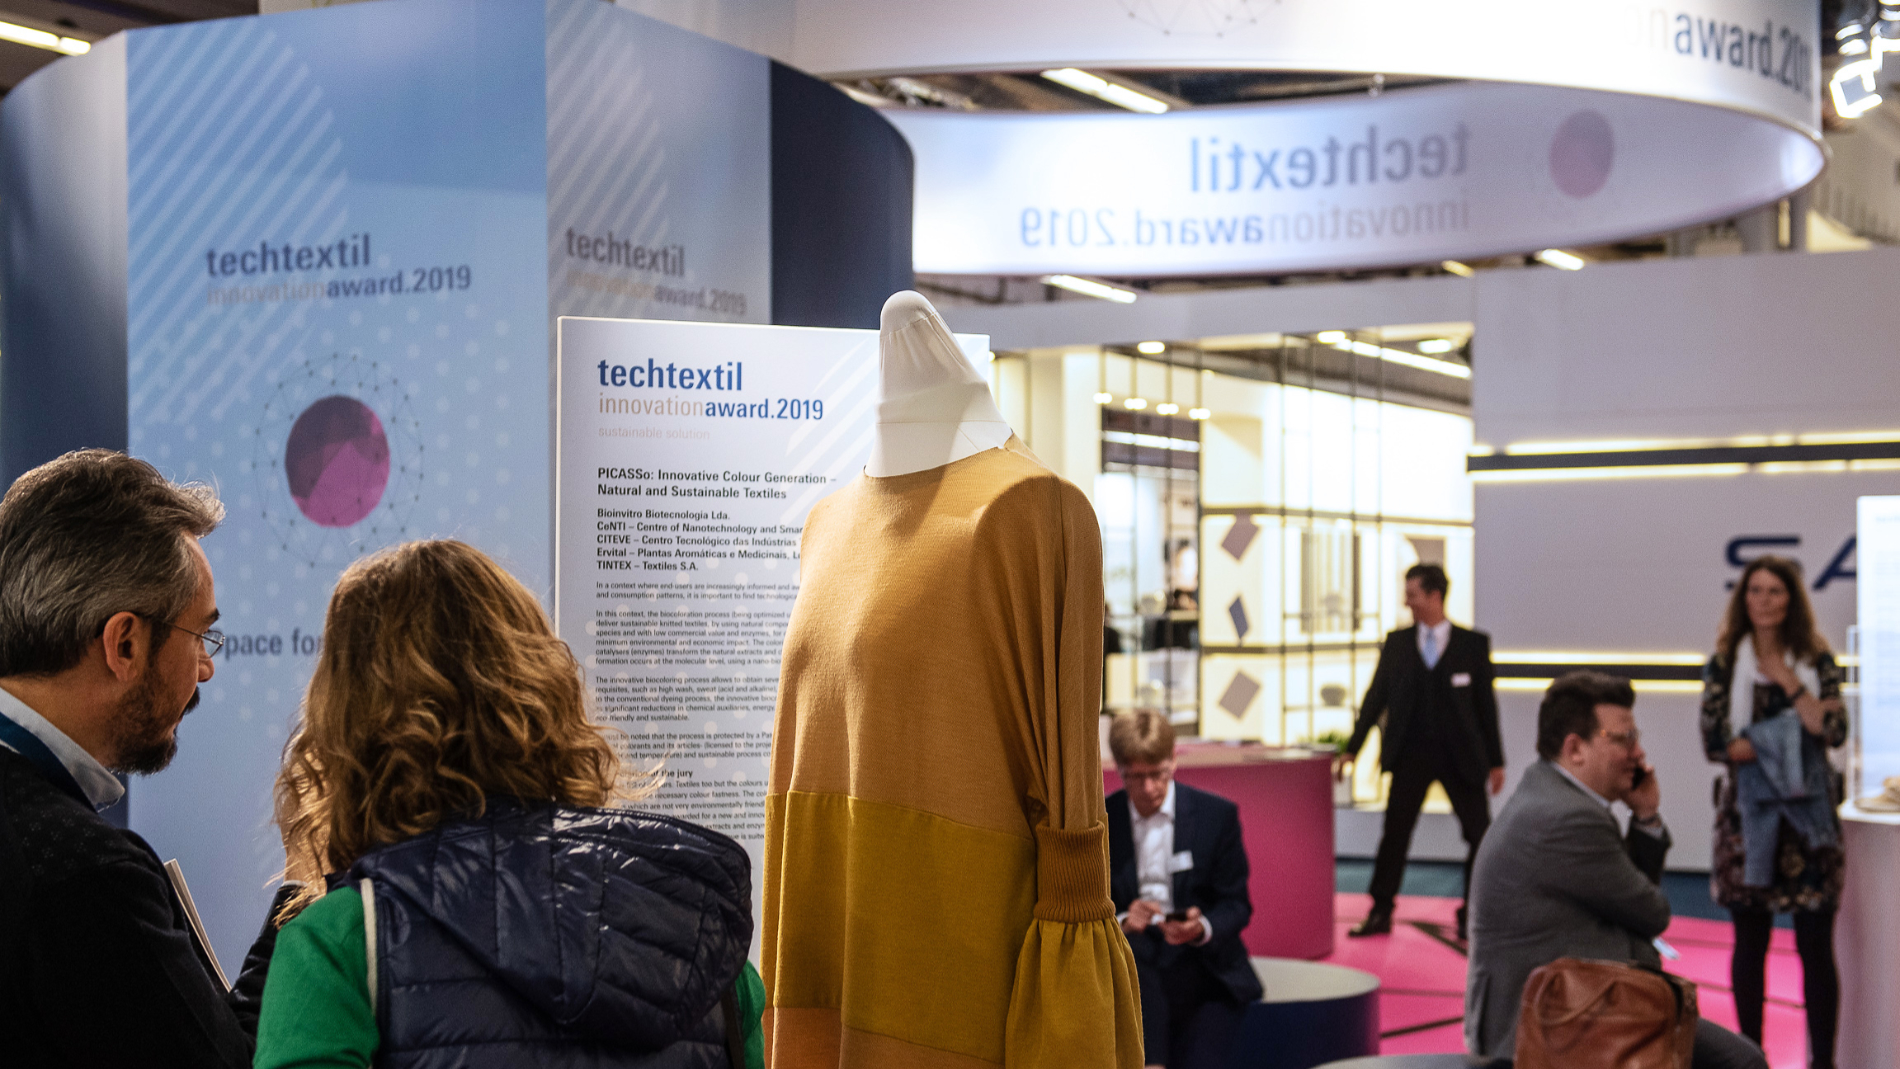 Techtextil Innovation Award (Source: Messe Frankfurt Exhibition GmbH / Pietro Sutera)